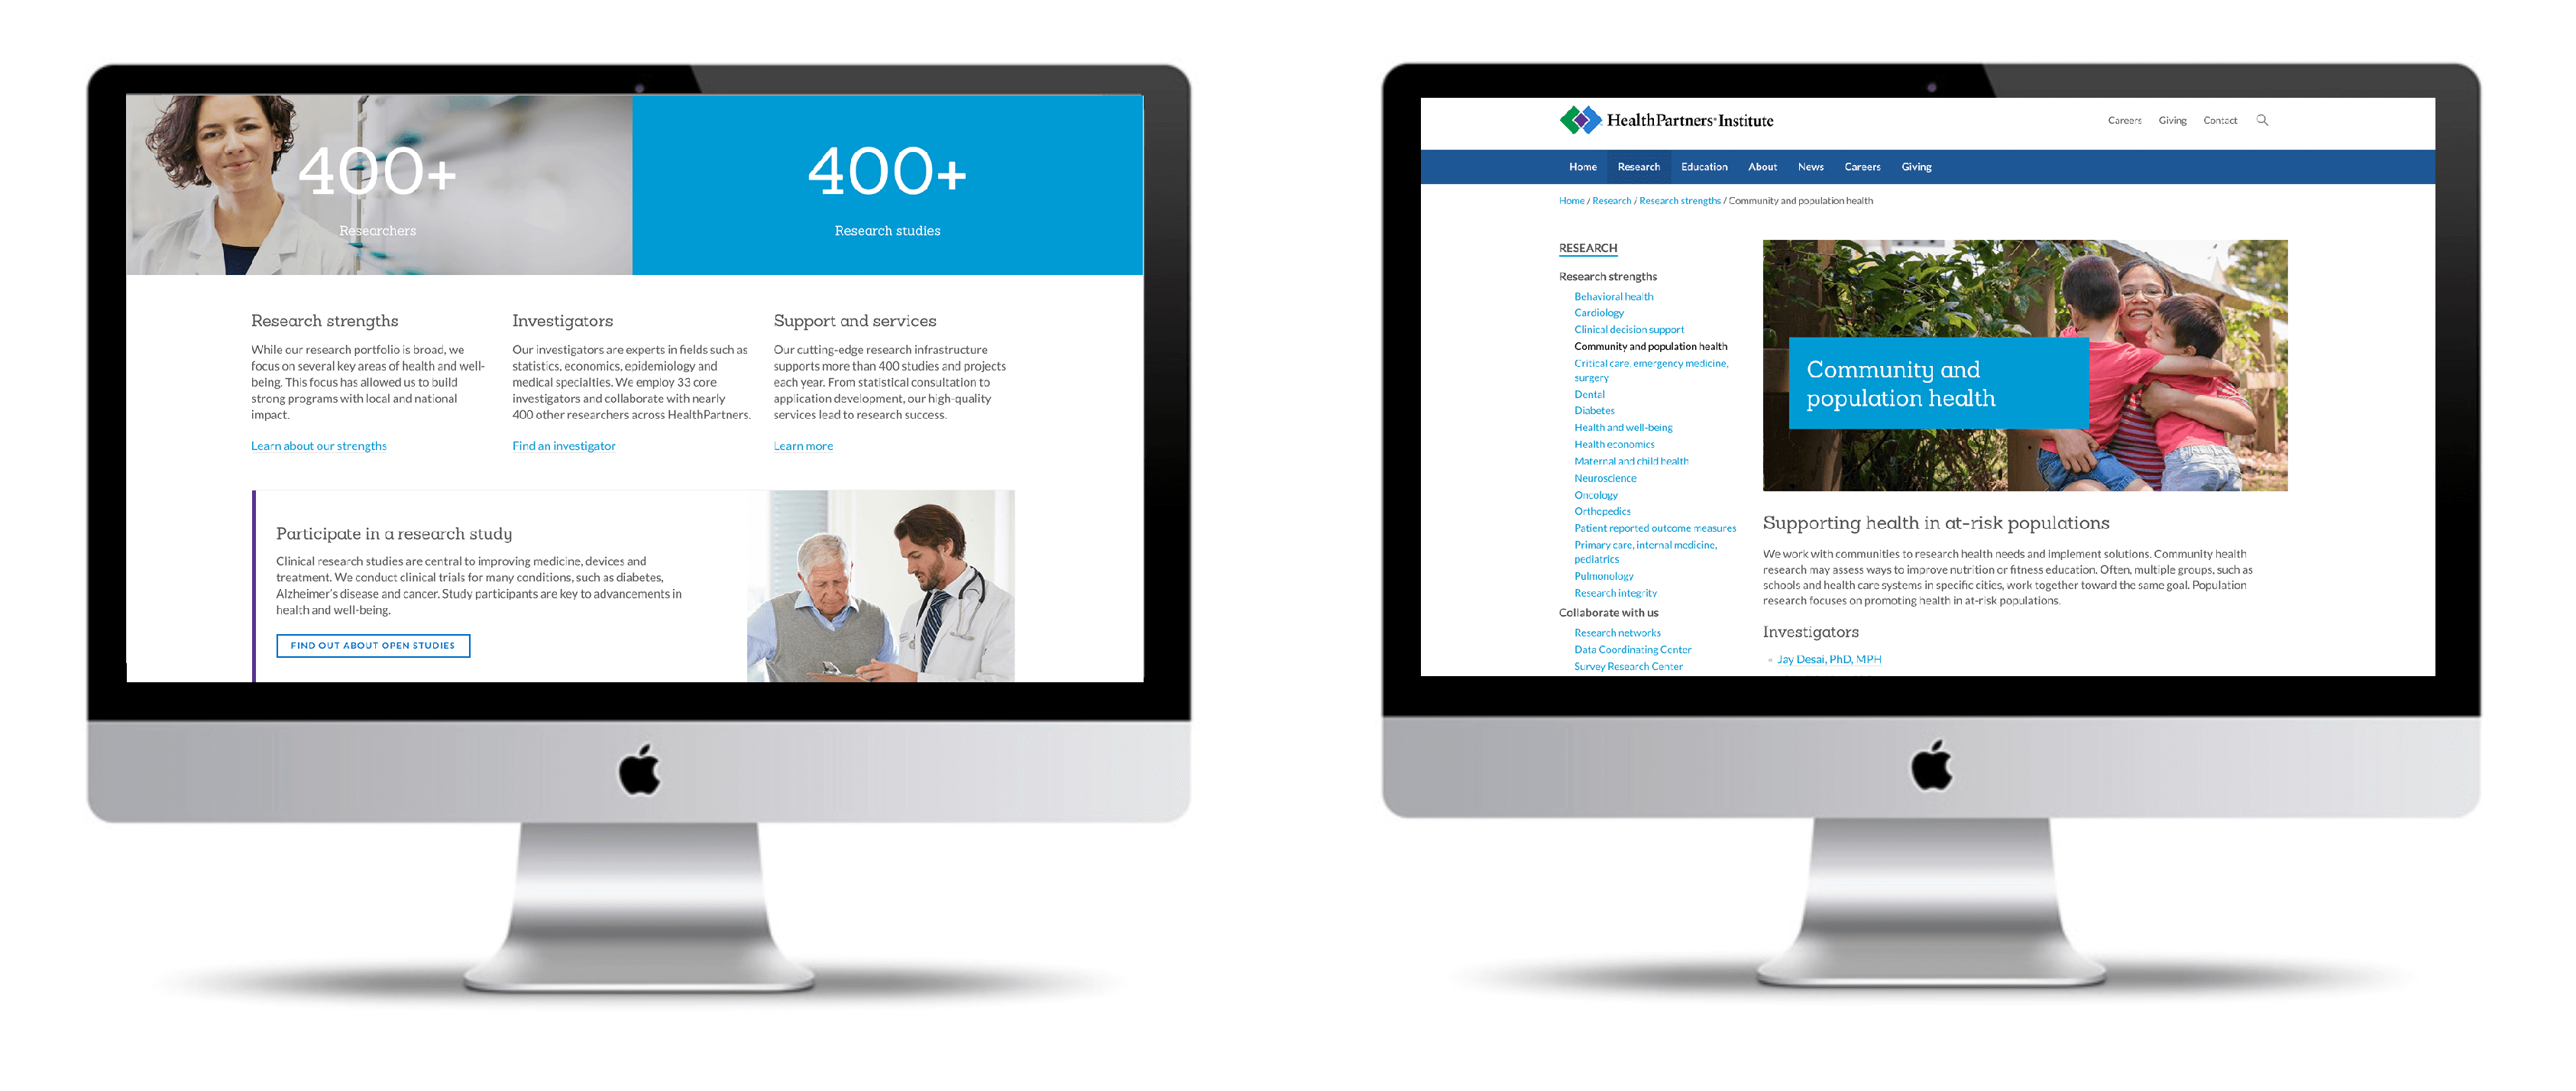 HealthPartners Institute Website